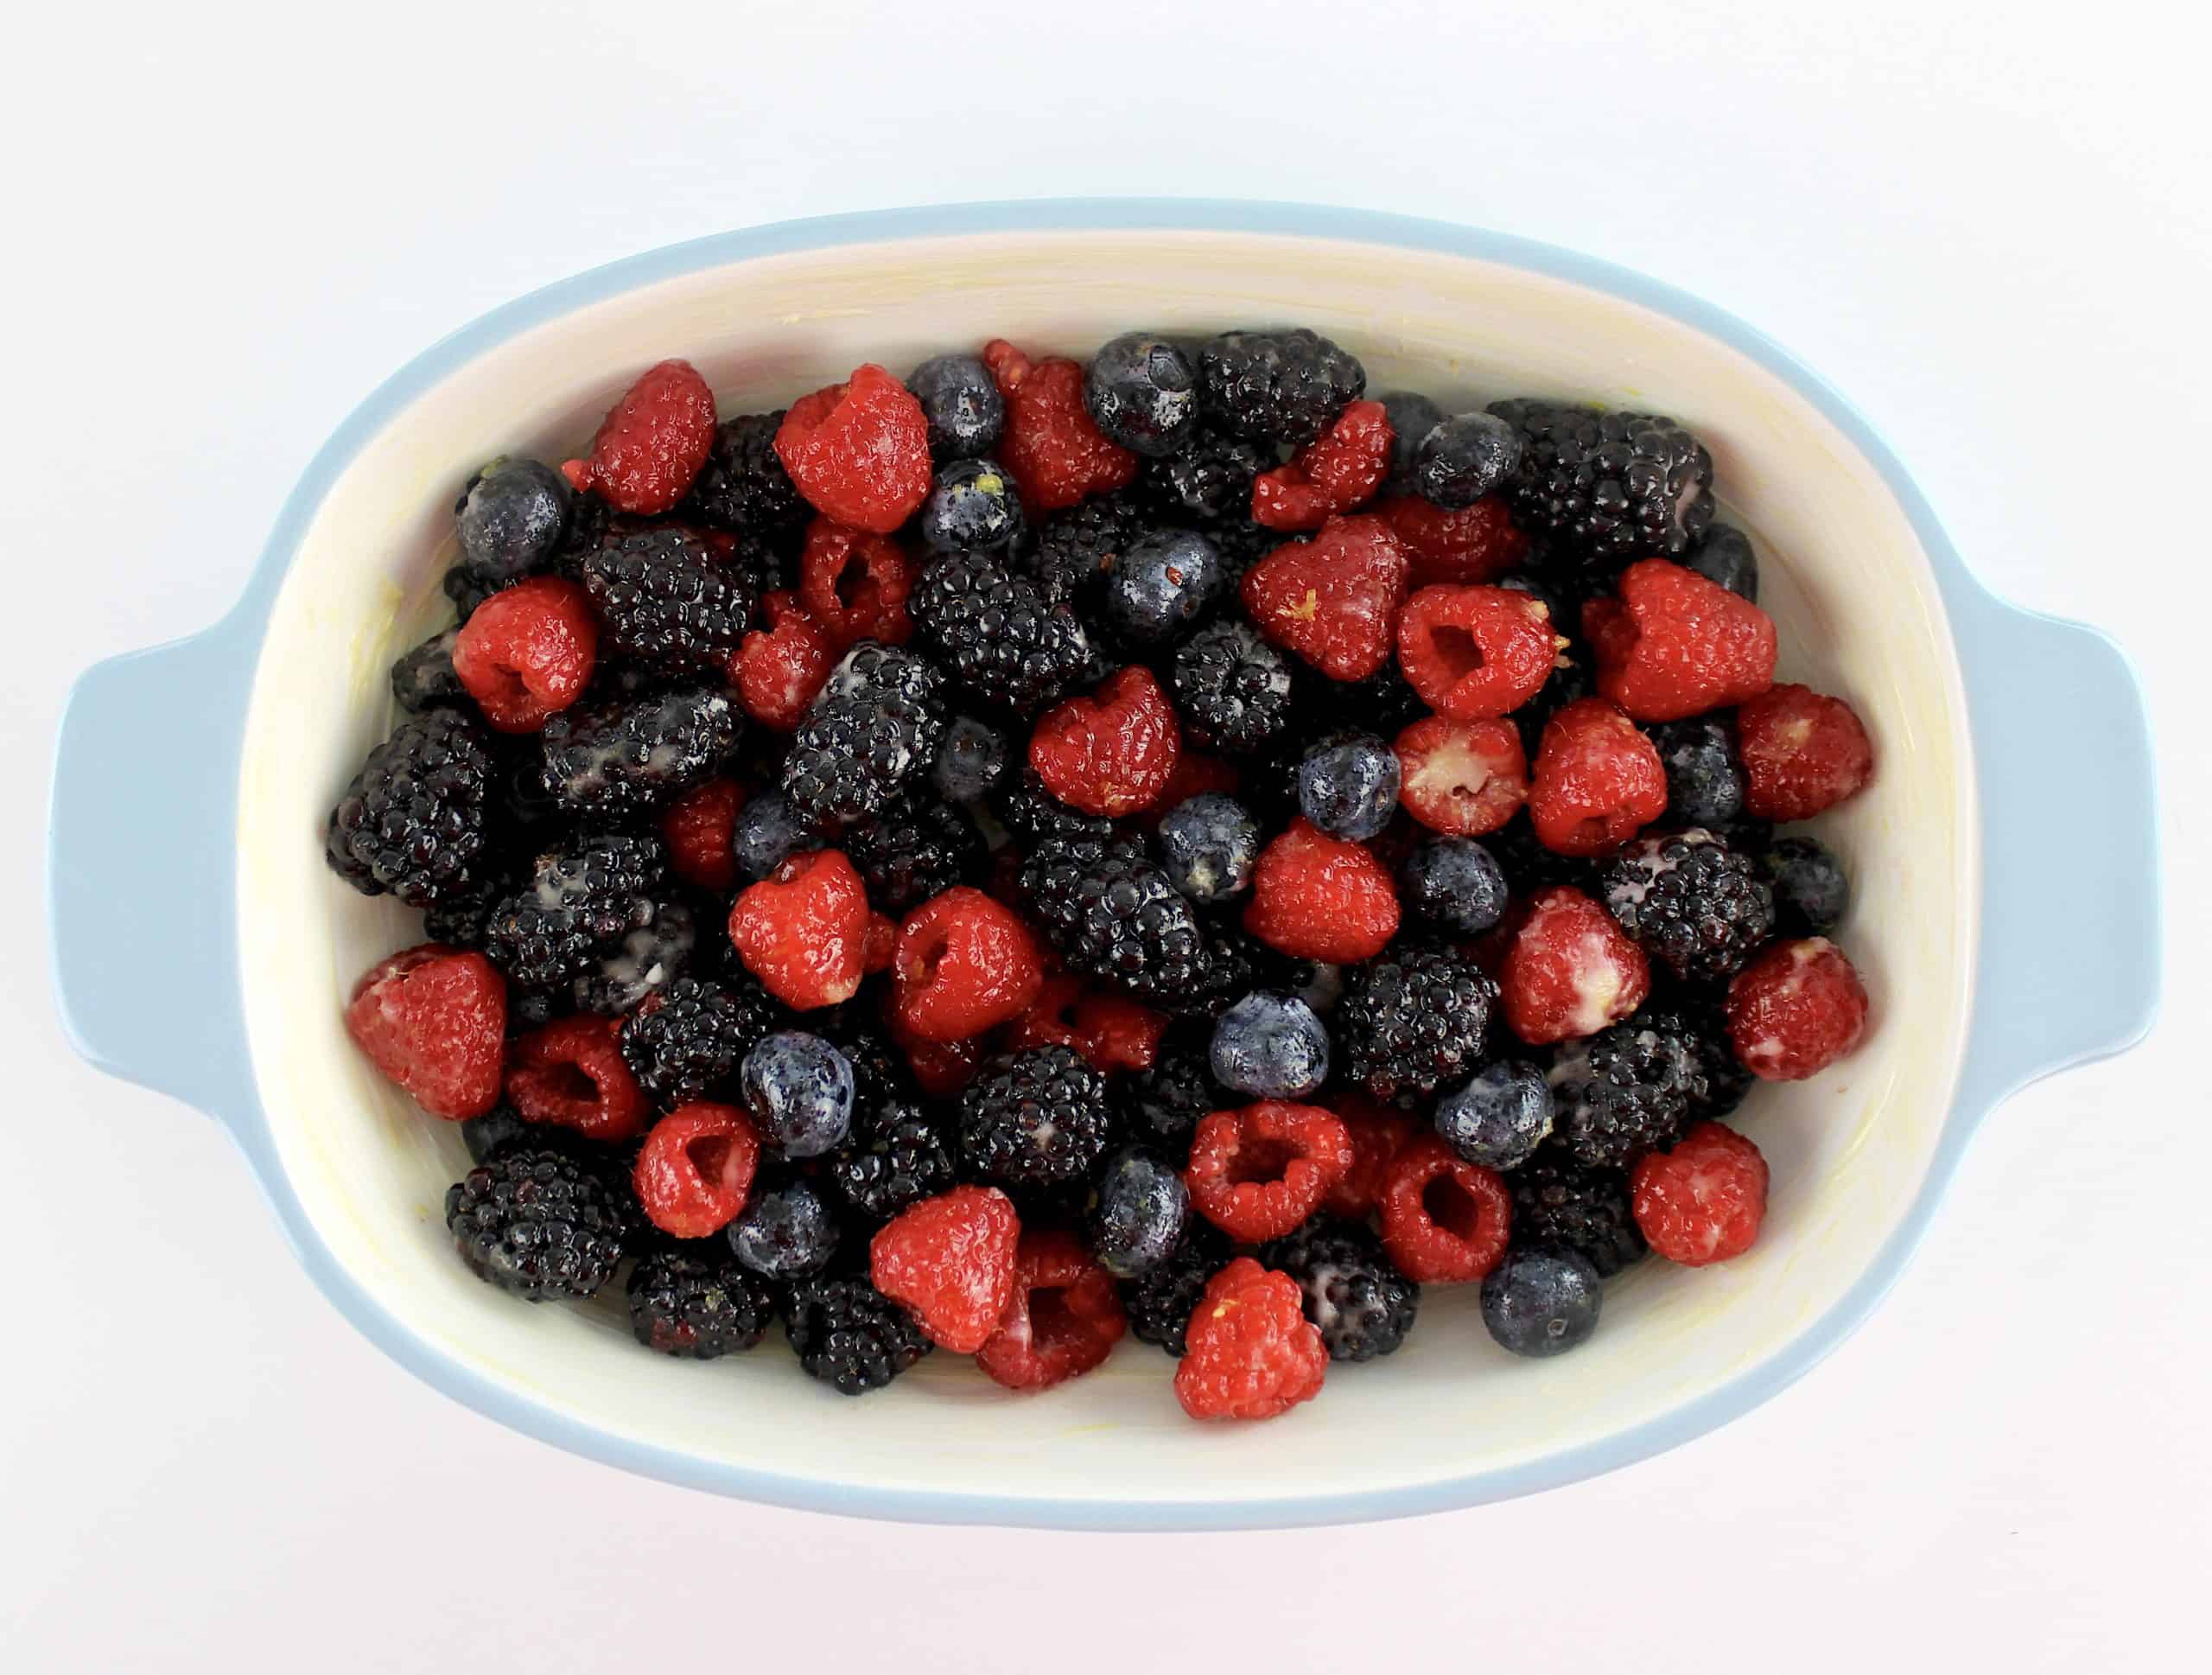 mix of berries tossed in sweetener in casserole baking dish